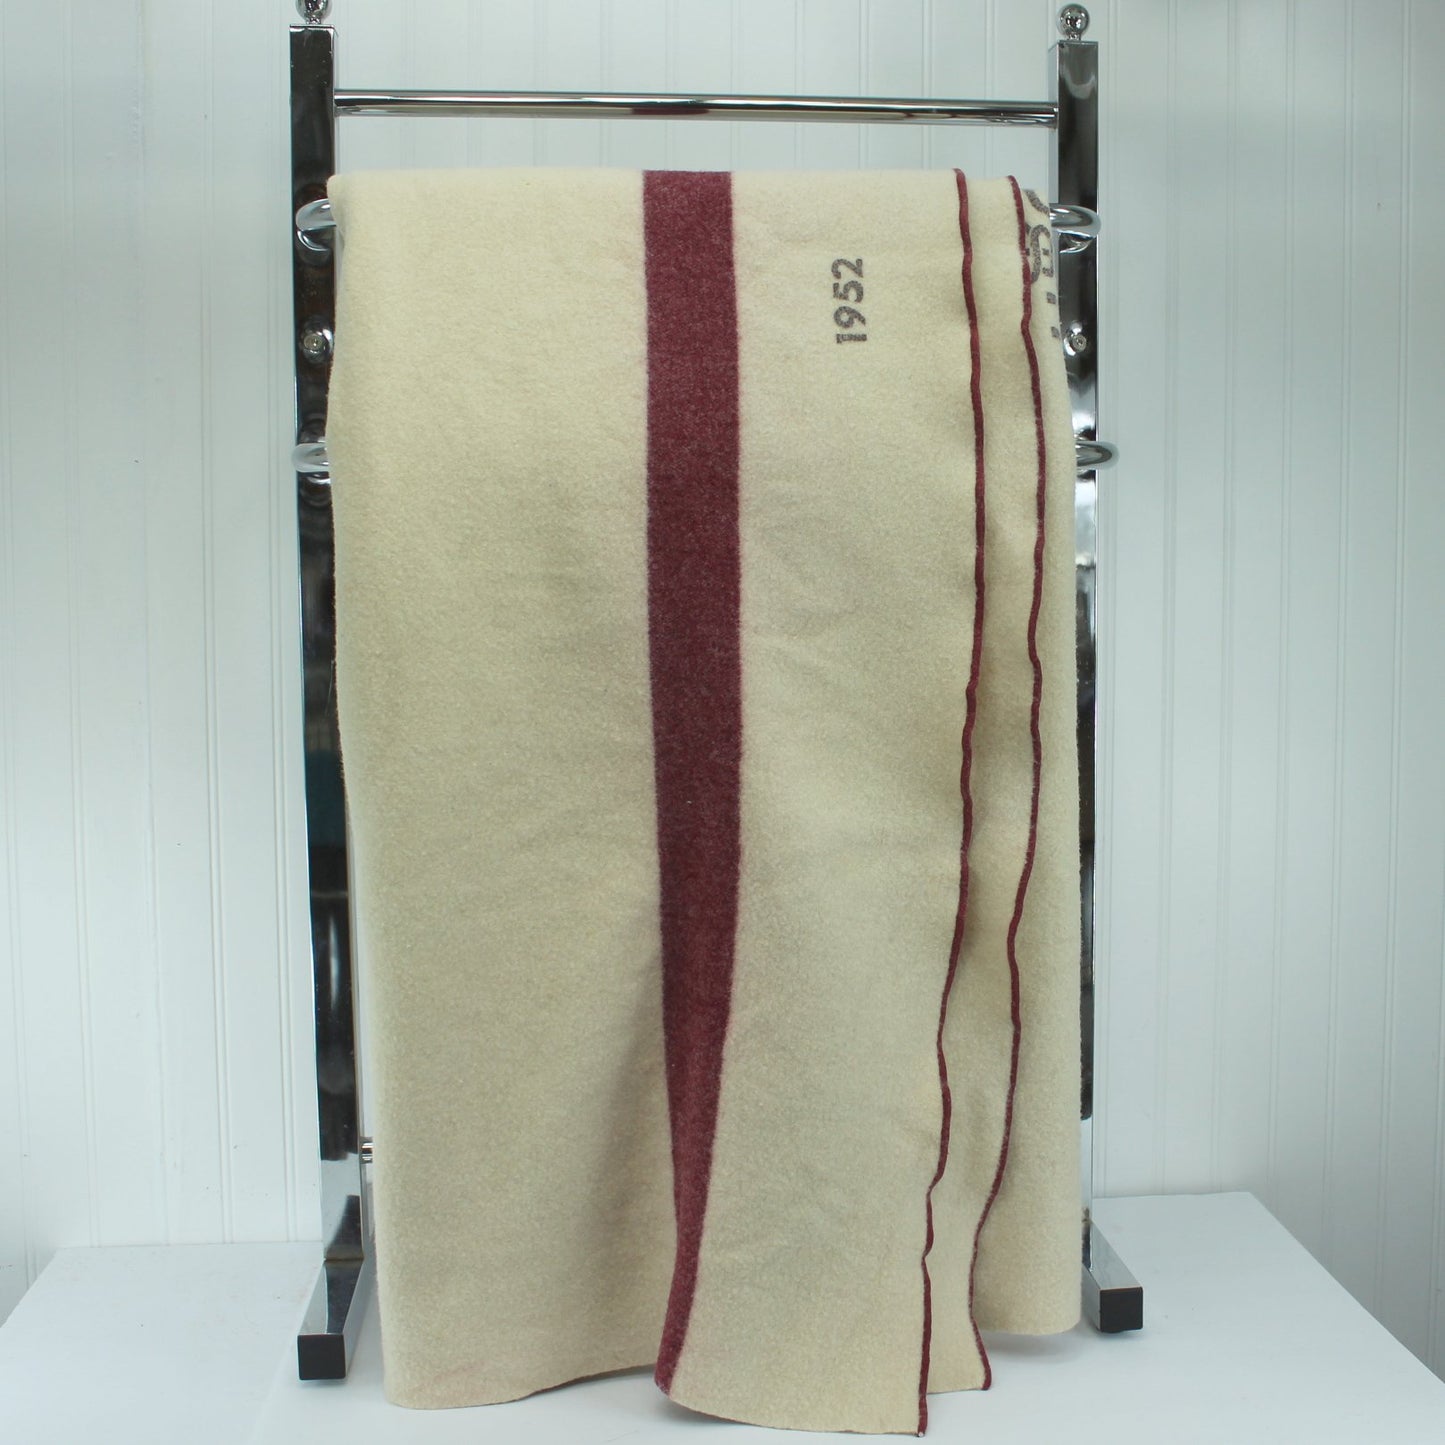 Faribault Faribo 1952 Medical Insignia Military Style Wool Blanket long view